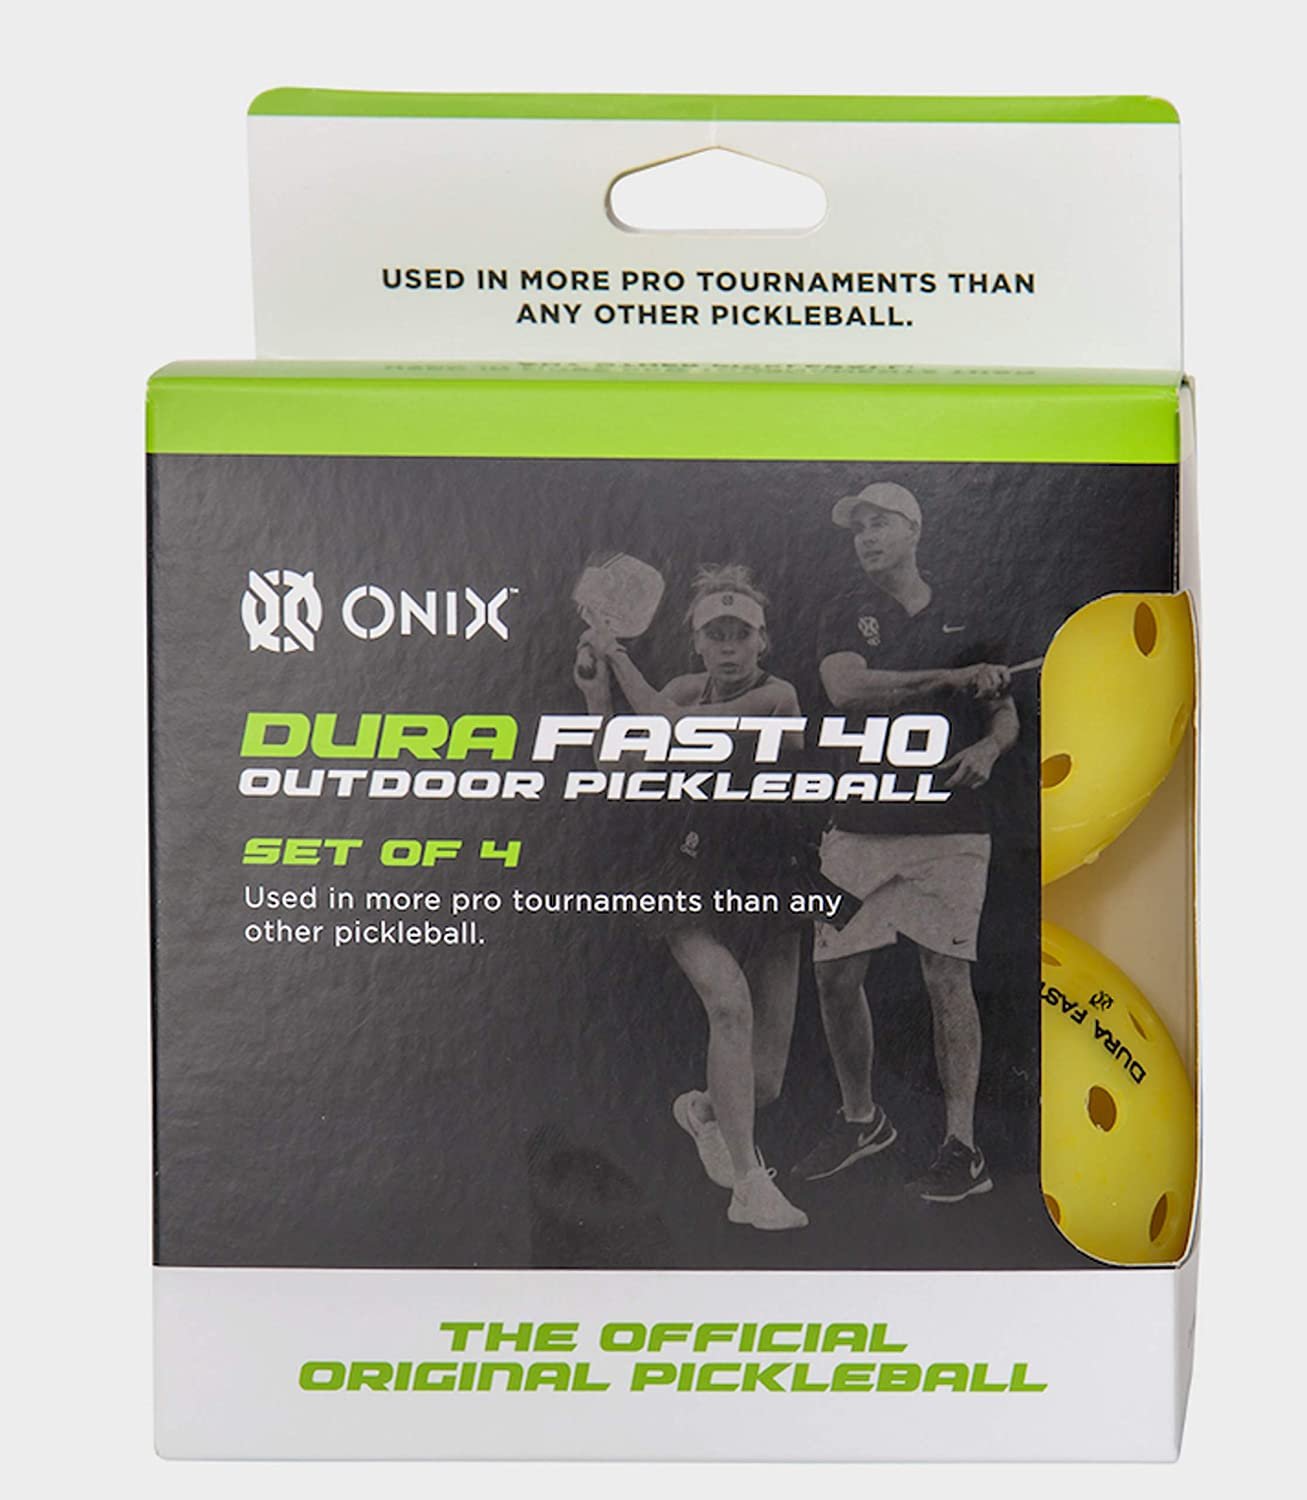 Onix Pickleball Dura Fast 40 Pickleball Balls - Outdoor - Yellow - 3 Balls